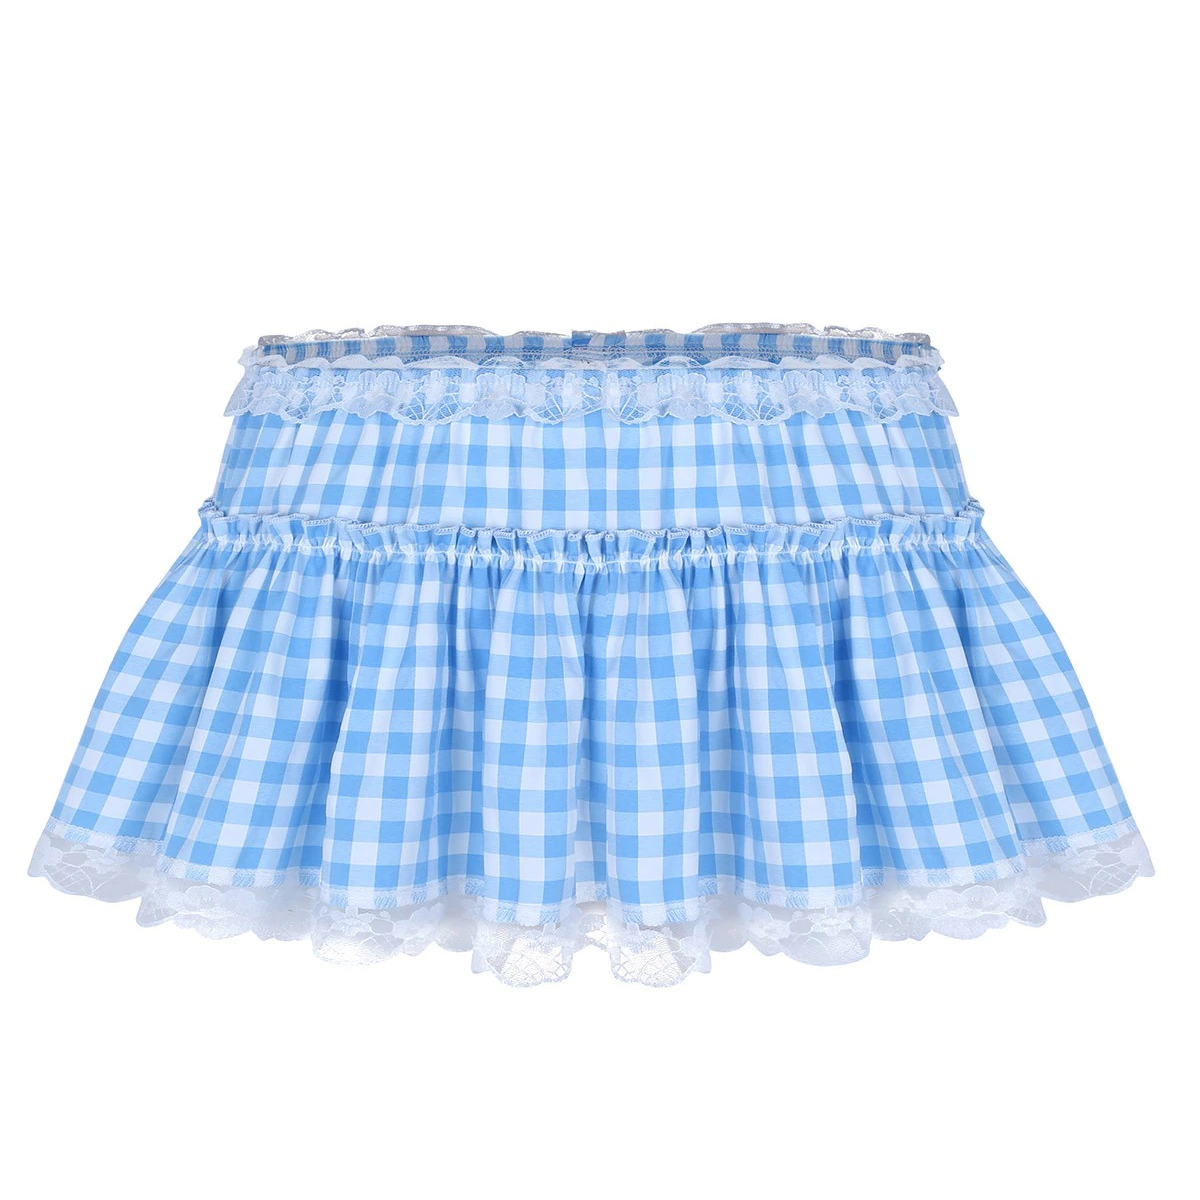 Elastic Waistband Short Skirt with Lace / Sexy Pleated A-Line Mini Skirt - EVE's SECRETS